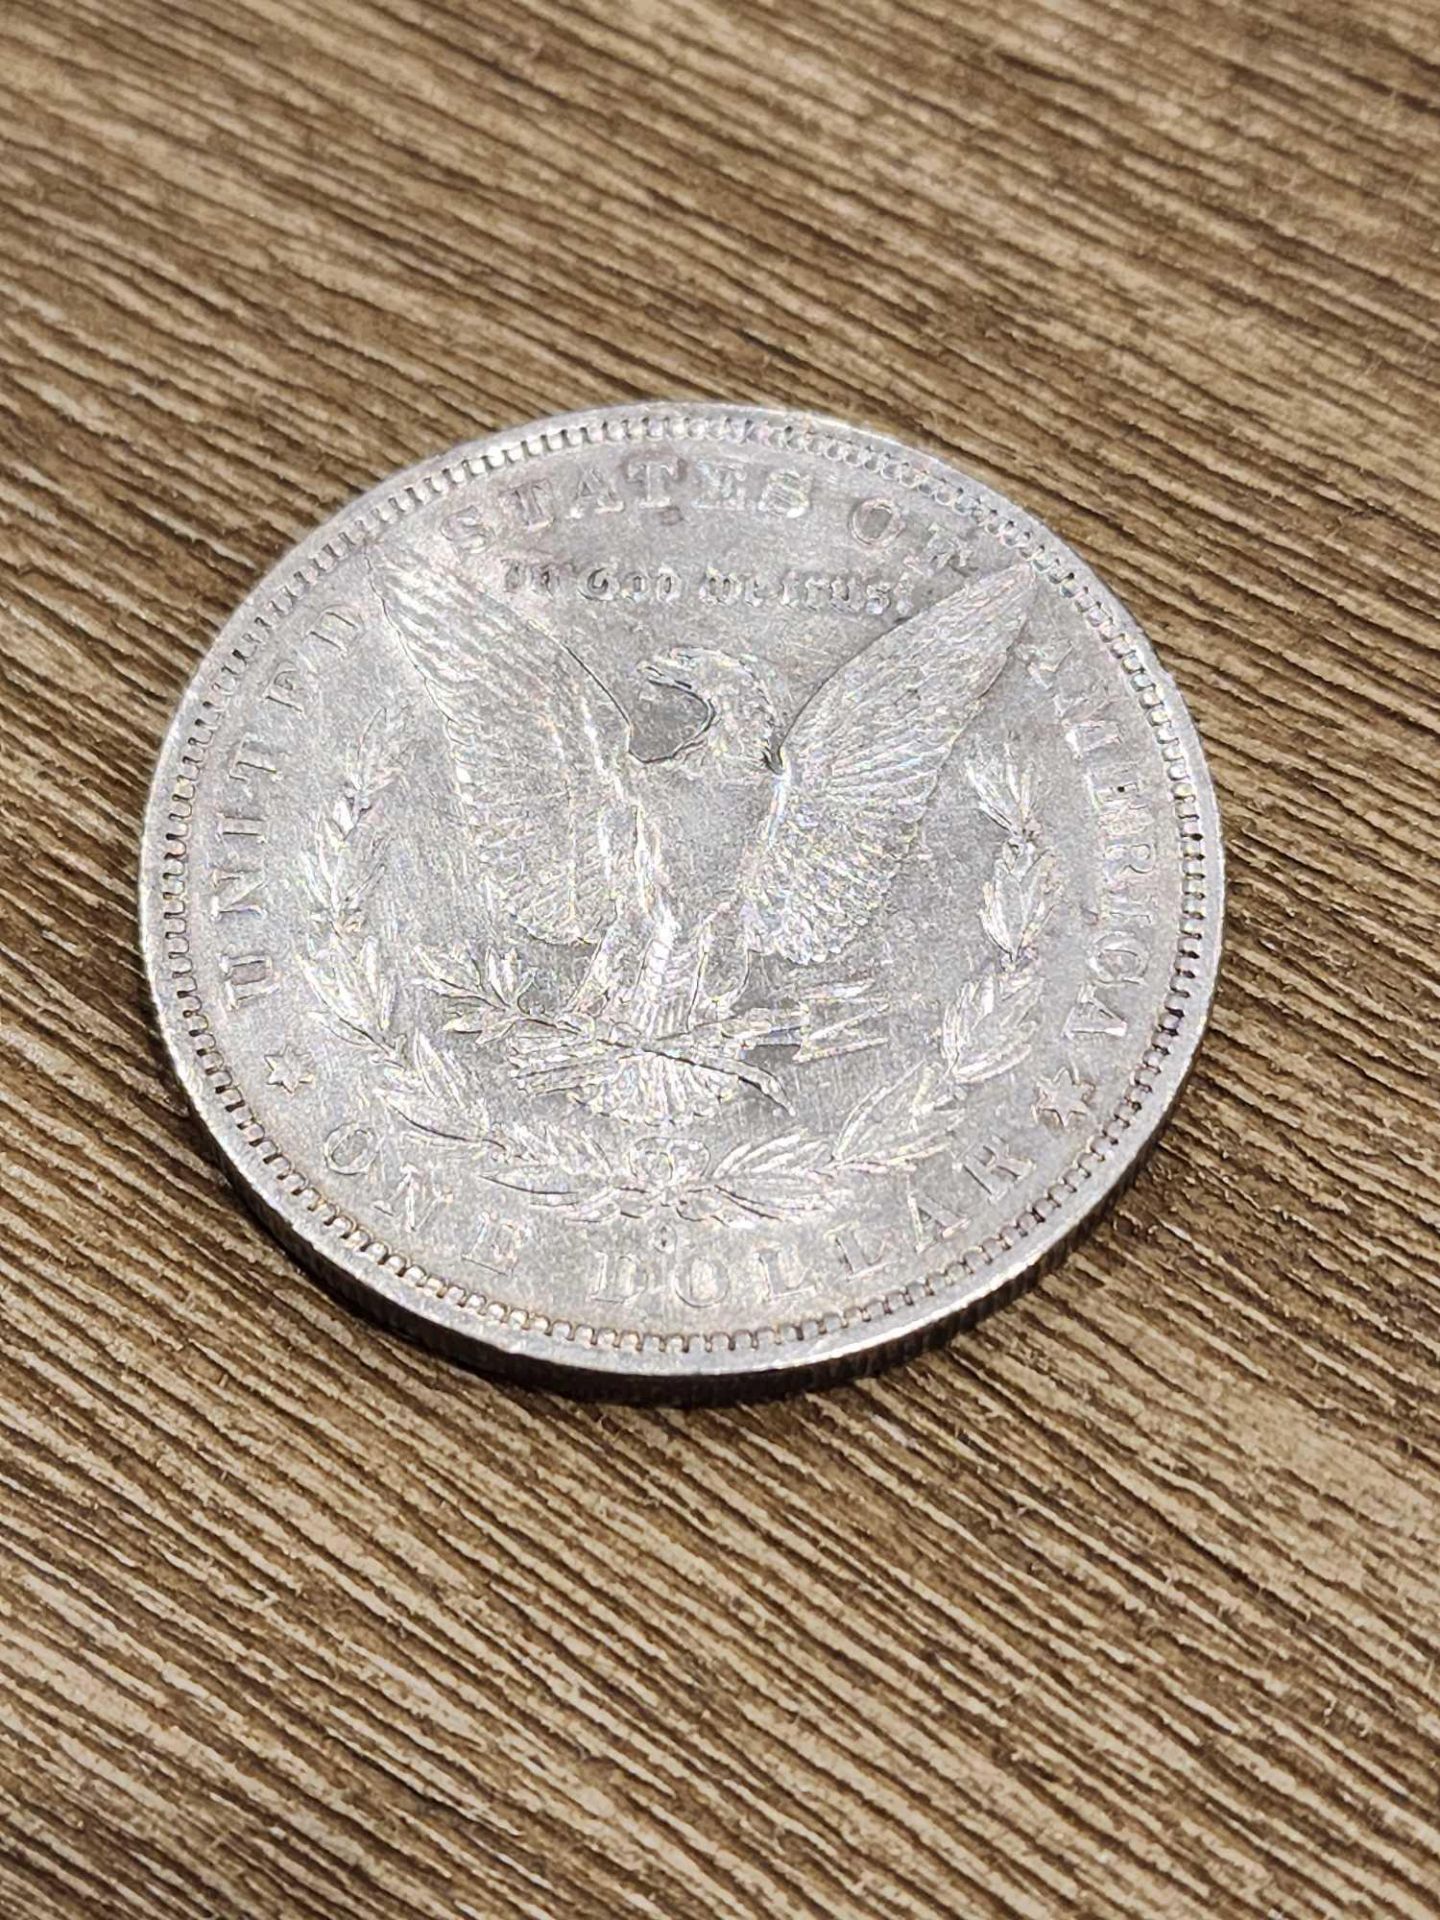 1882 Very Fine Morgan Dollar - Image 2 of 2